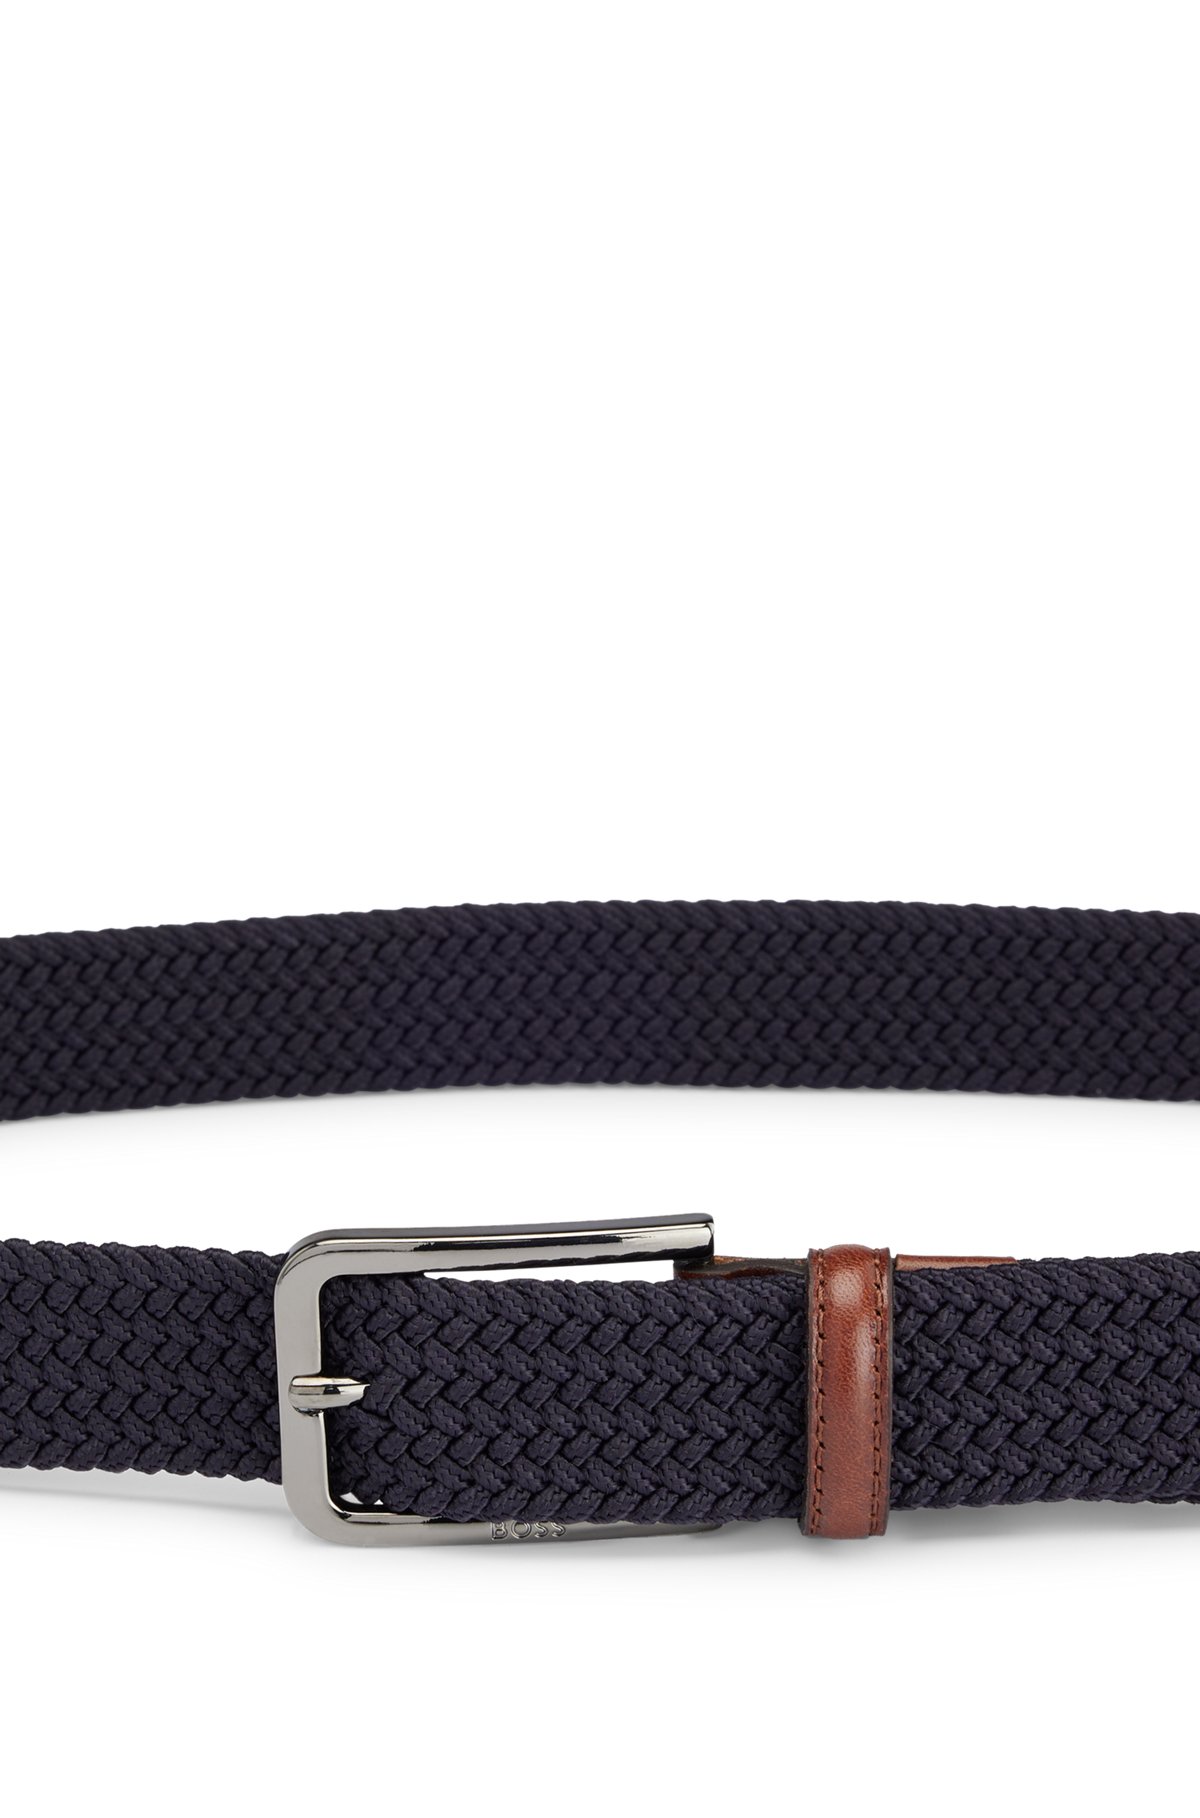 Men's Stretch Braided Woven Belts - BEB1301